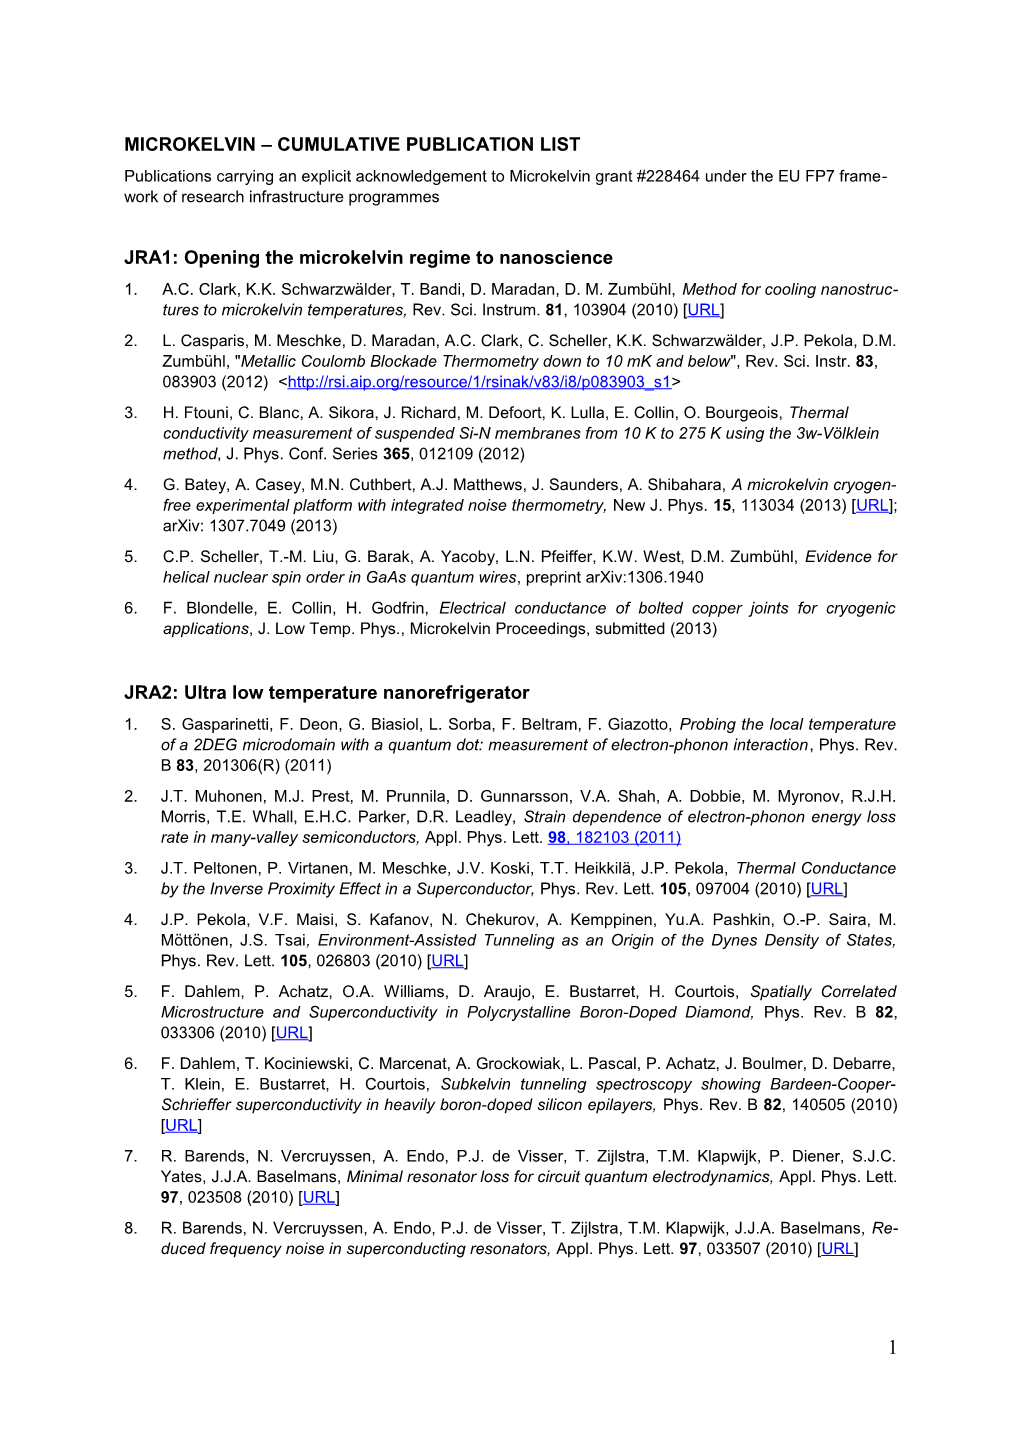 Microkelvin Cumulative Publication List